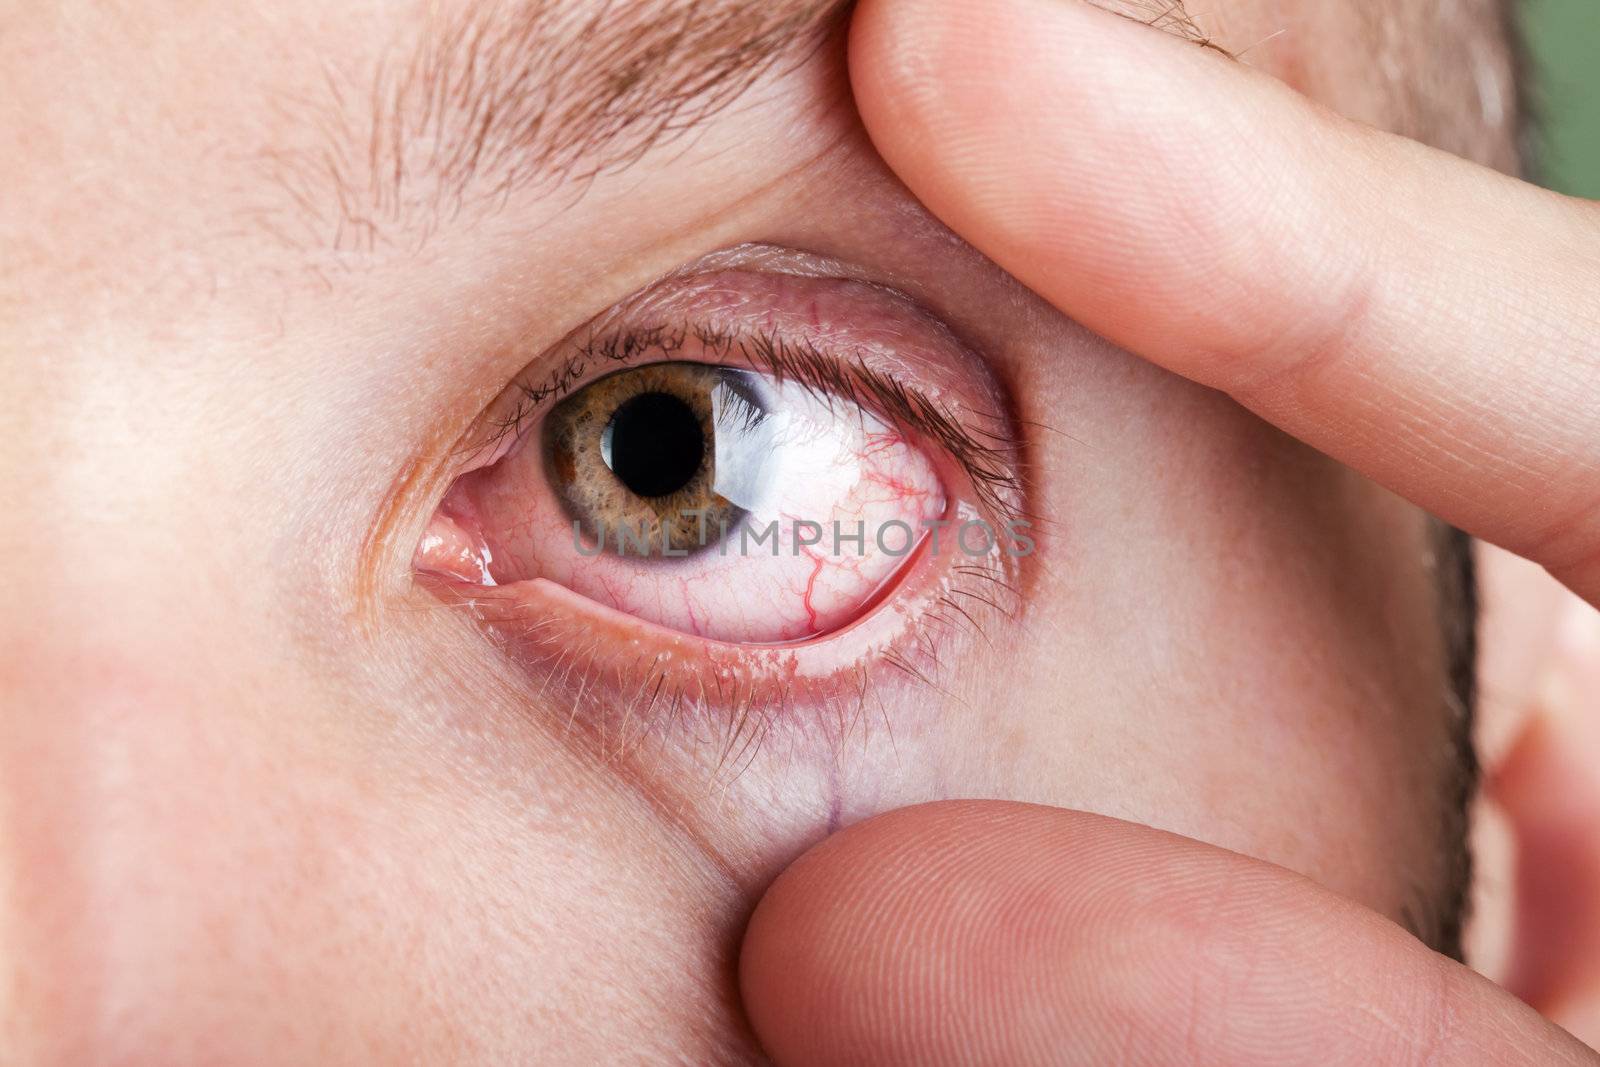 Blood capillary human eye by ia_64